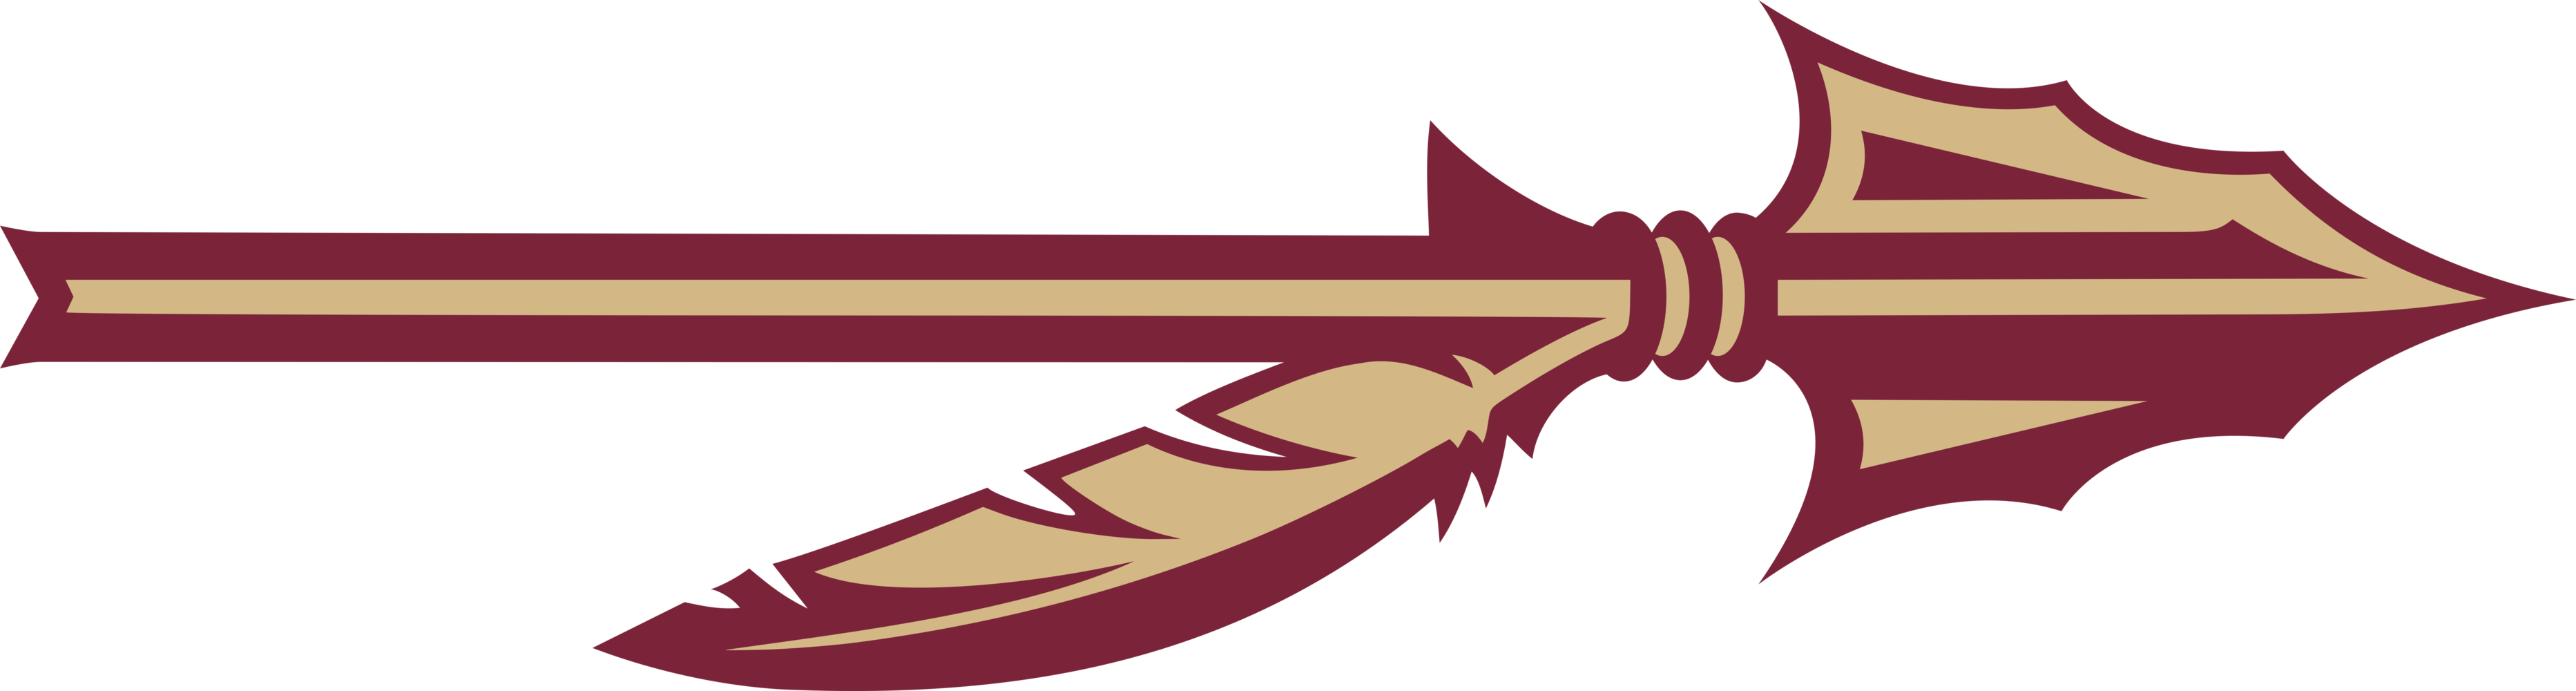 Arrow Spear Logo - New FSU Spear and Pattern Creamer's Sports Logos